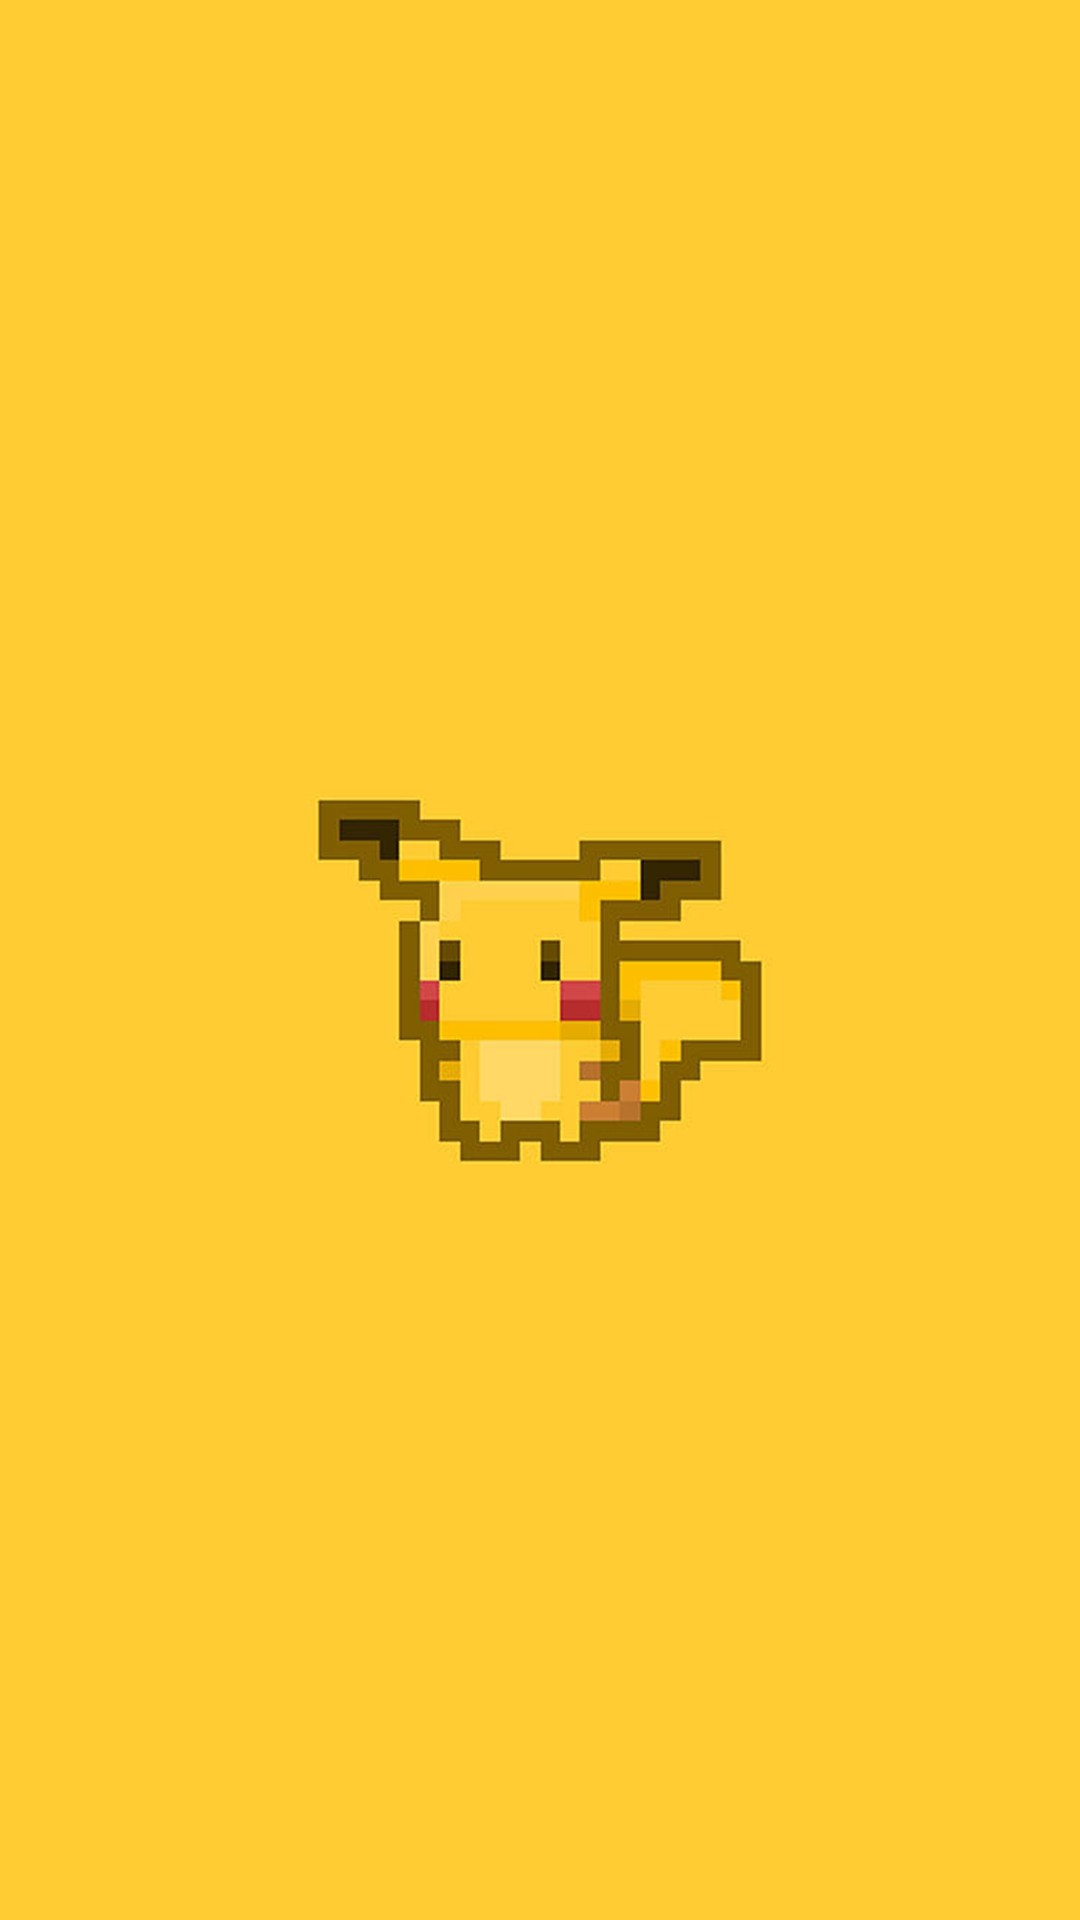 Pikachu Pokemon Pixel Art iPhone 8 wallpaper